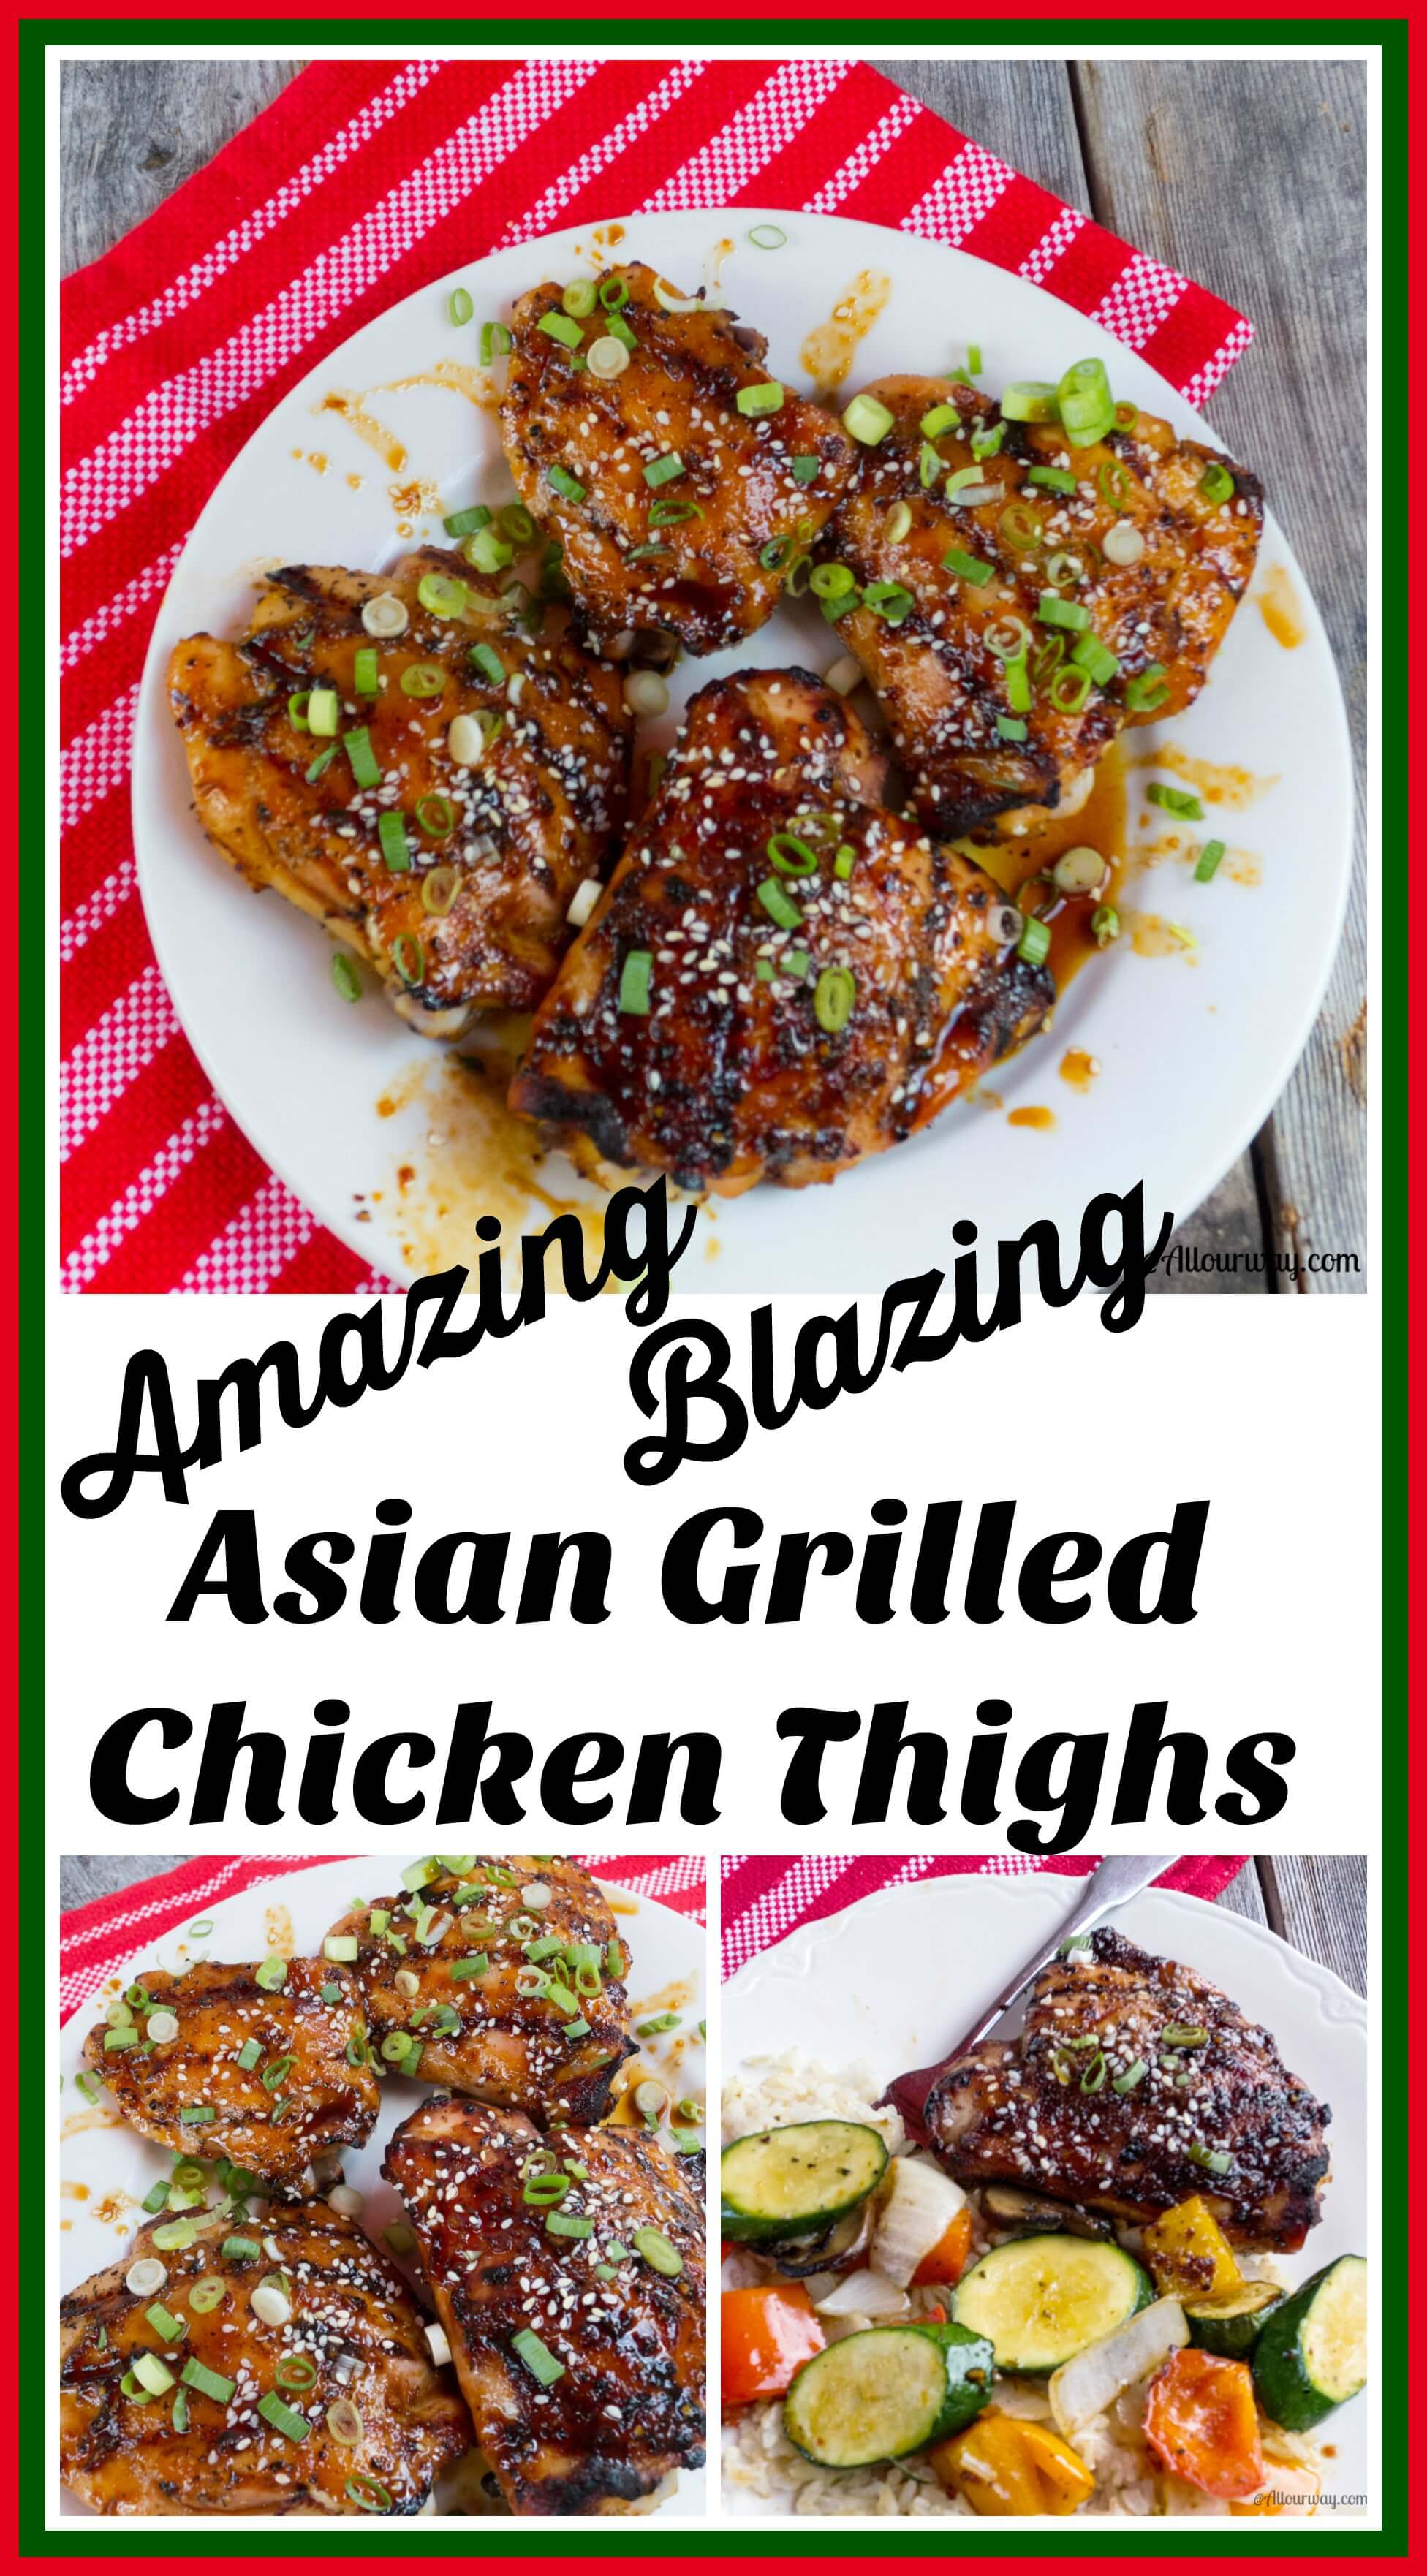 Amazing Blazing Asian Grilled Chicken Thighs @allourway.com